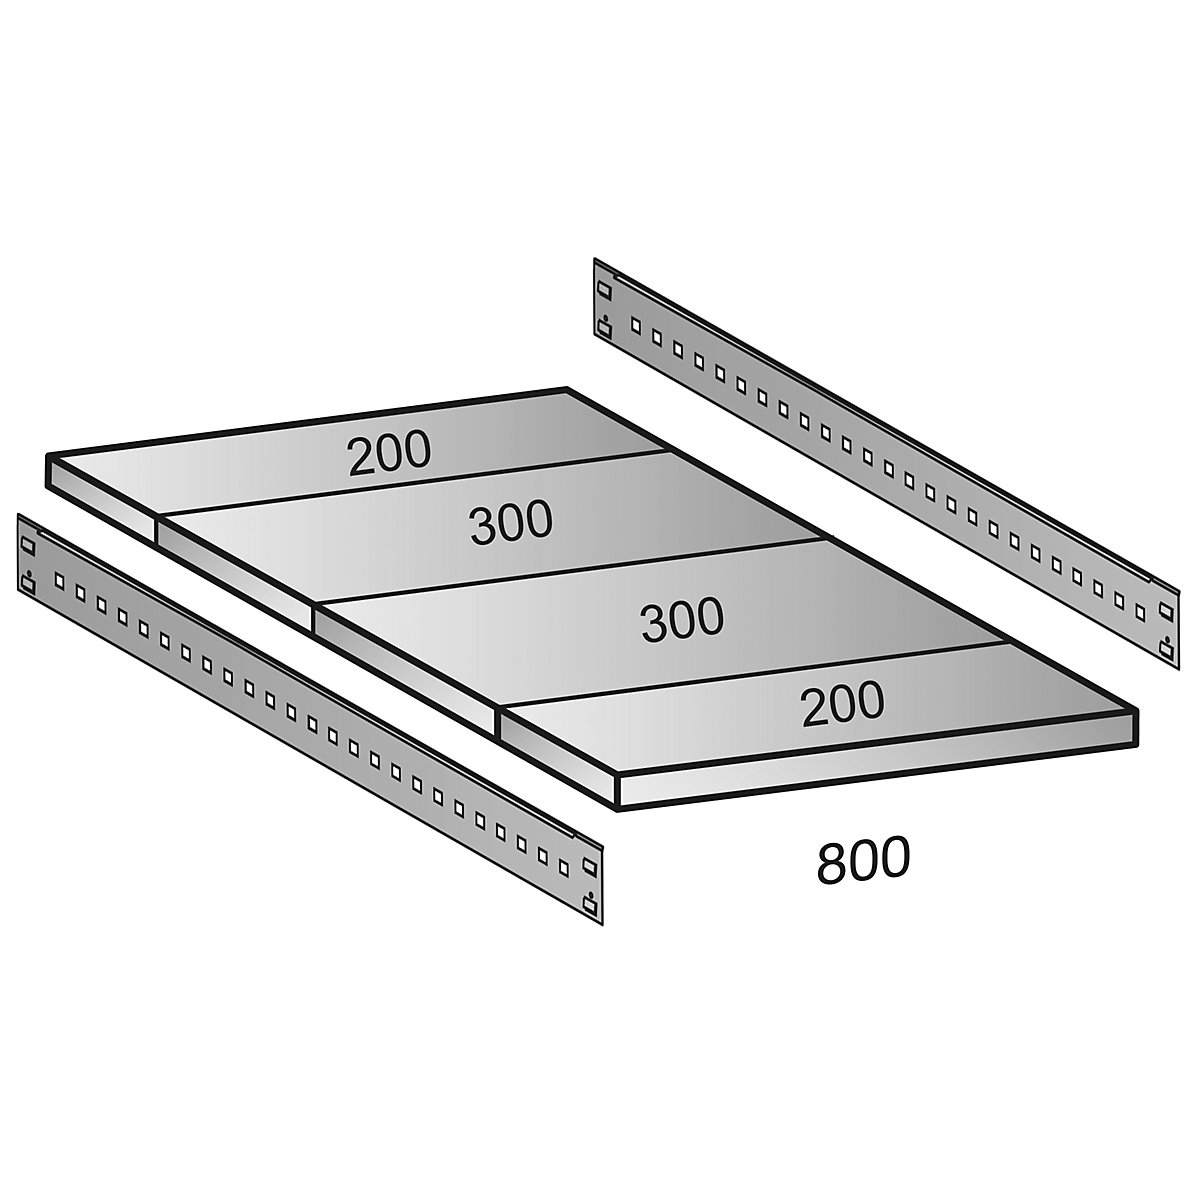 Shelf for CLEANA boltless shelf unit, shelf width 800 mm, depth 1000 mm